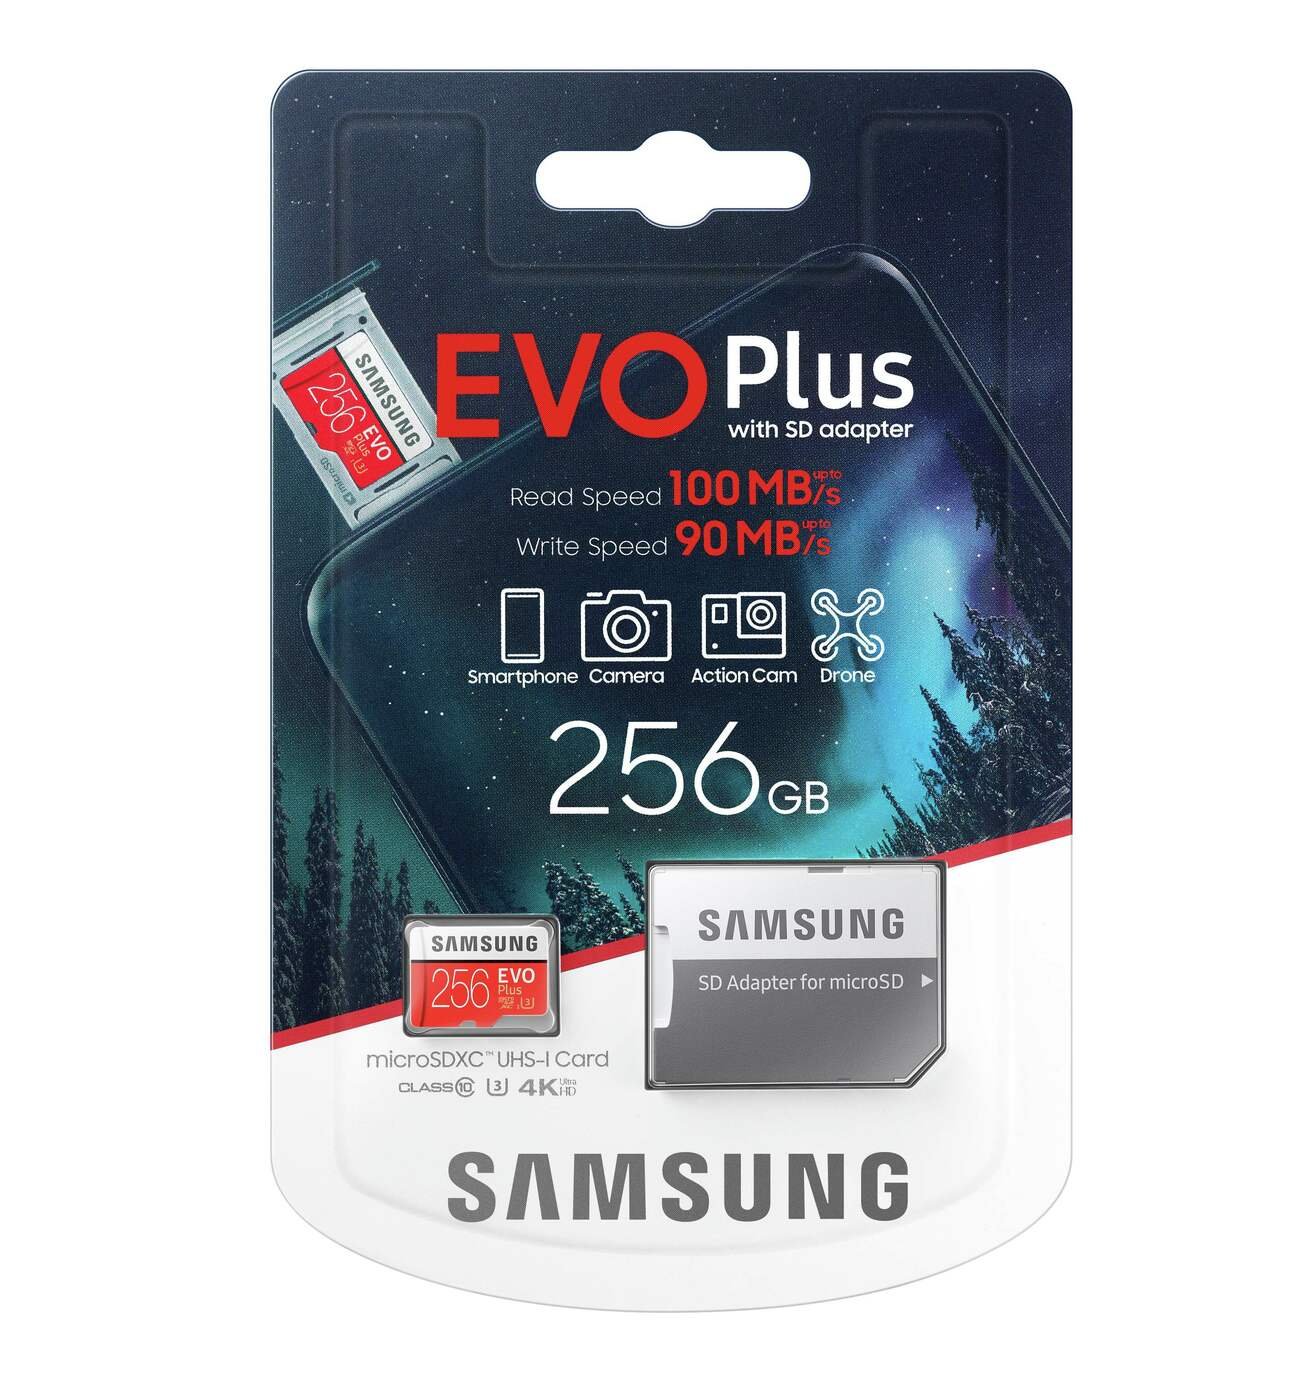 Samsung Evo Plus MicroSD Memory Card Review